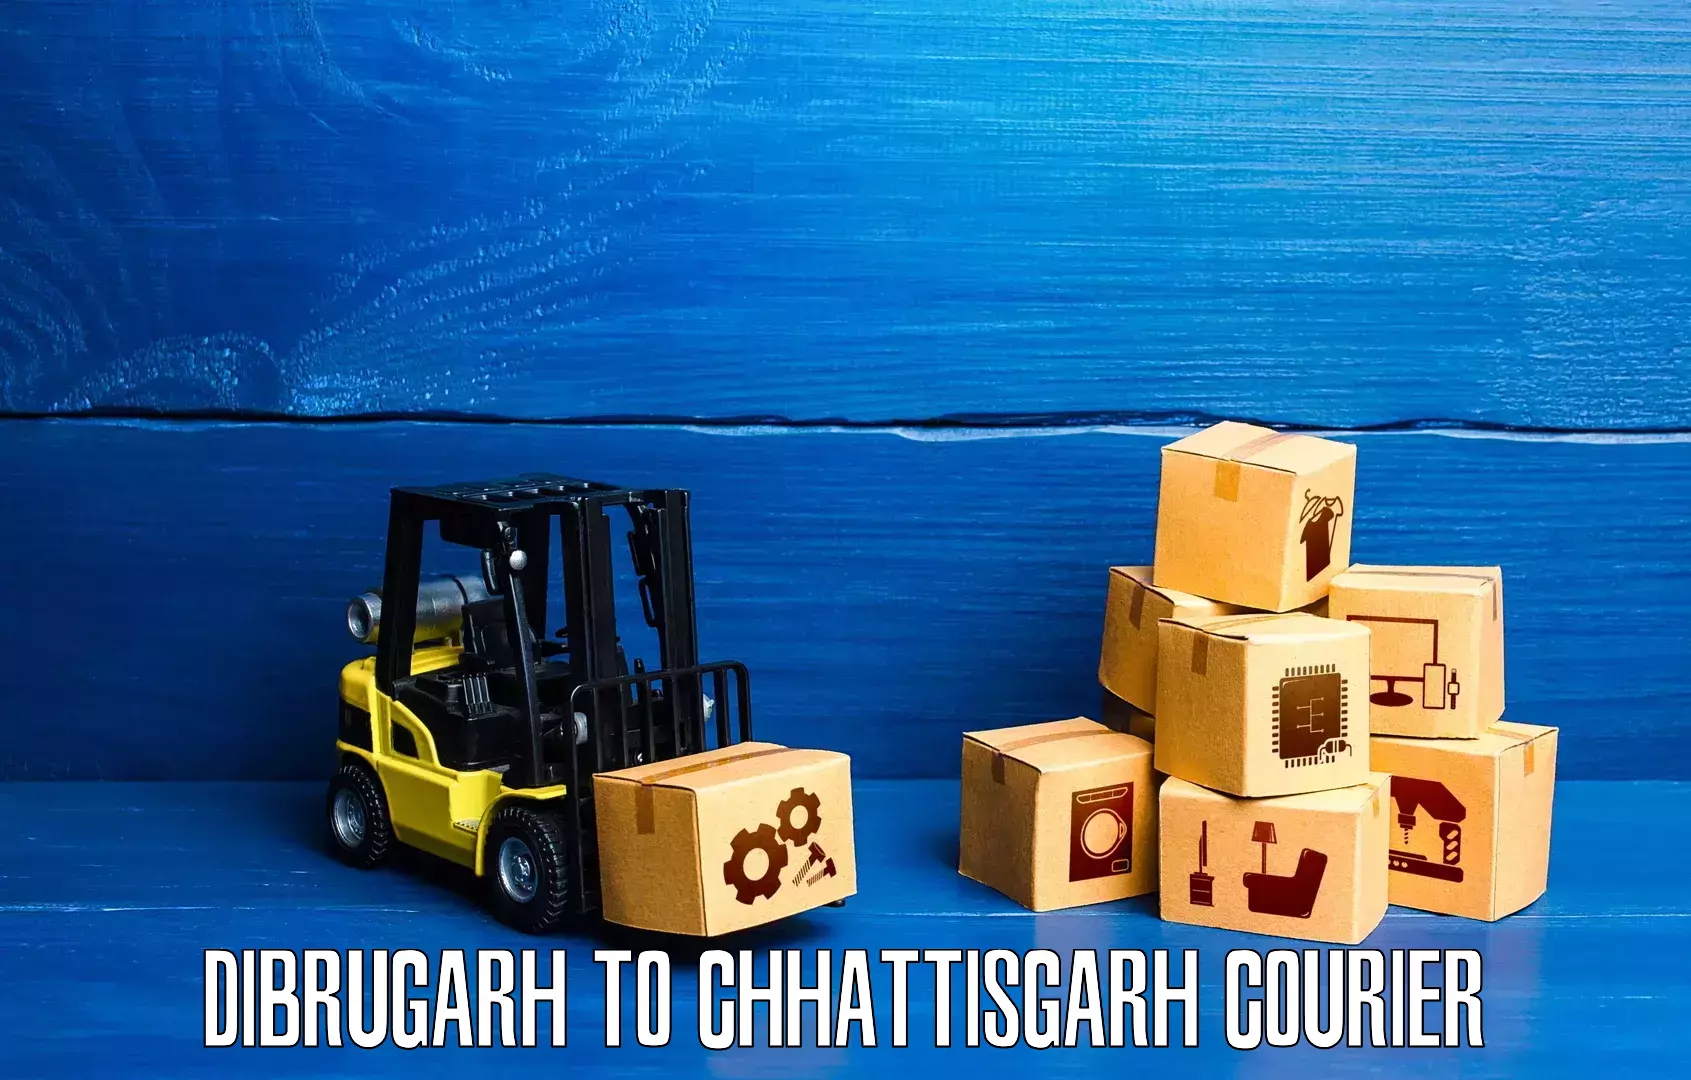 Flexible delivery schedules Dibrugarh to Bilaspur